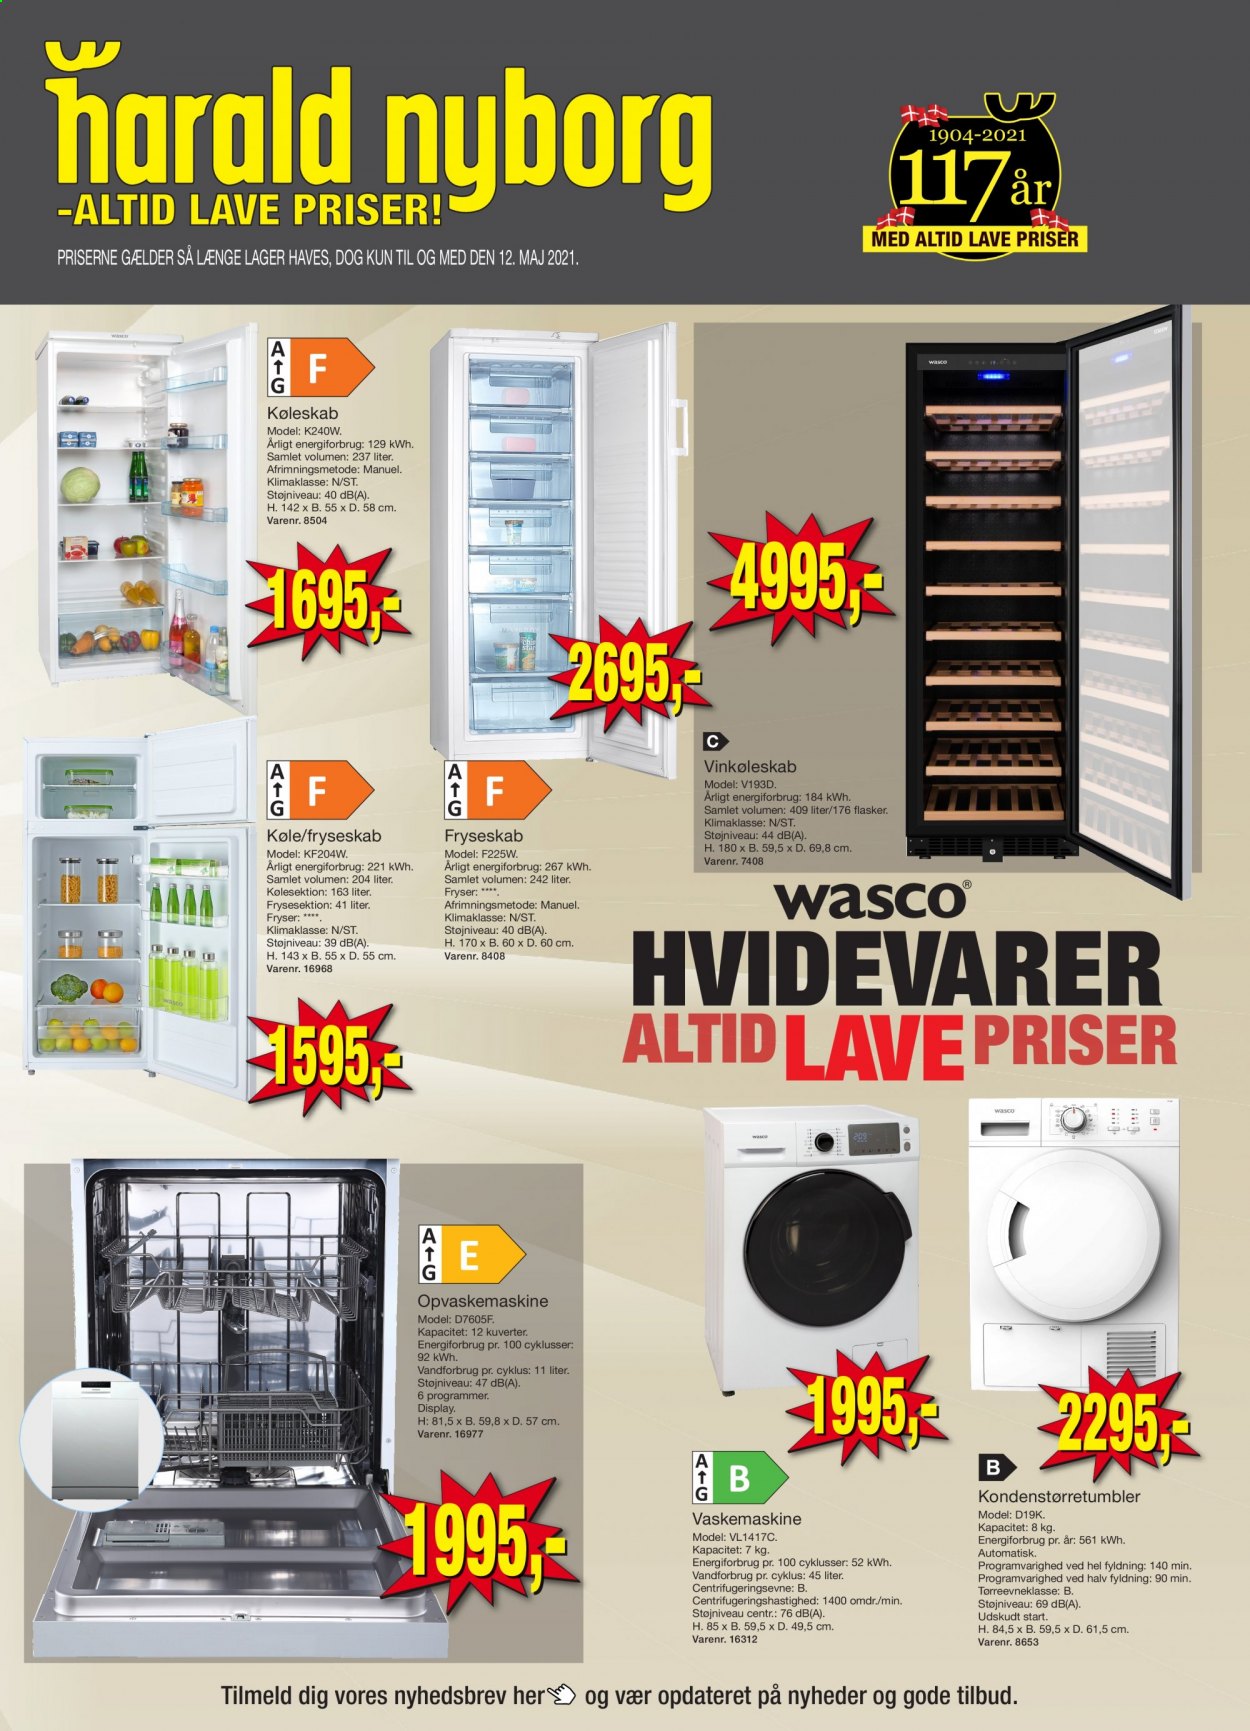 thumbnail - Harald Nyborg tilbud  - 6.5.2021 - 12.5.2021 - tilbudsprodukter - fryser, køleskab, vinkøleskab, opvaskemaskine. Side 1.